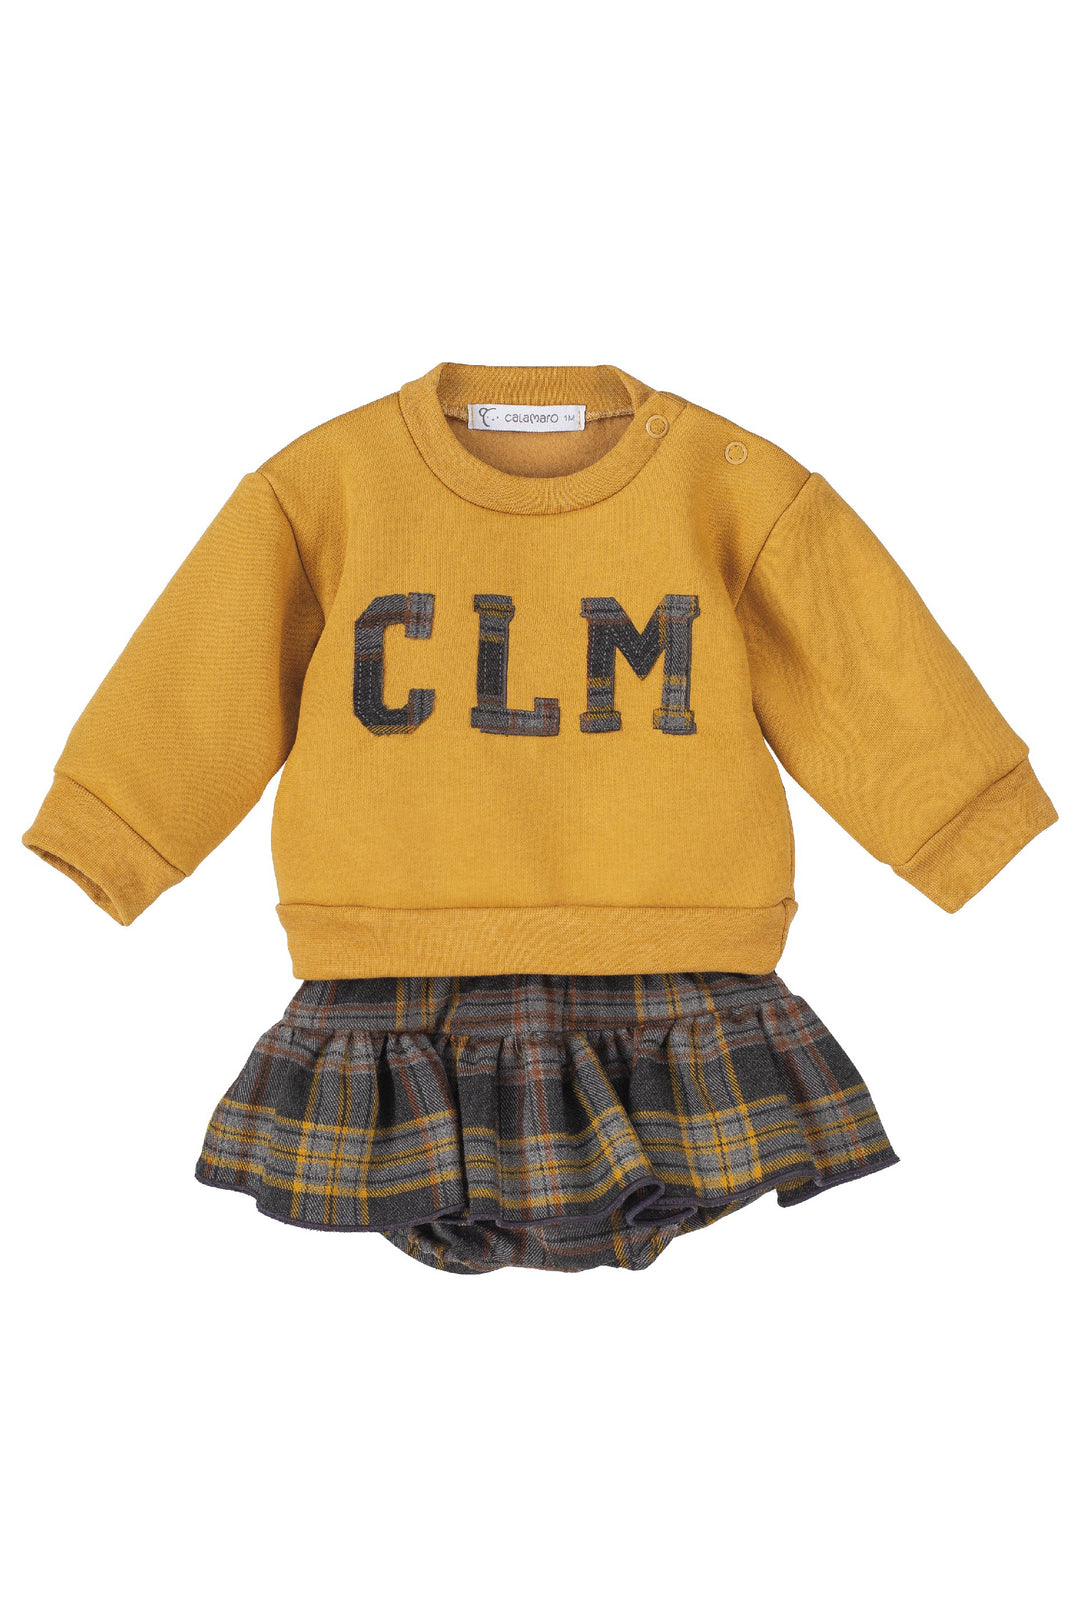 Calamaro "Sienna" Mustard Varsity Sweatshirt & Tartan Skirt | Millie and John